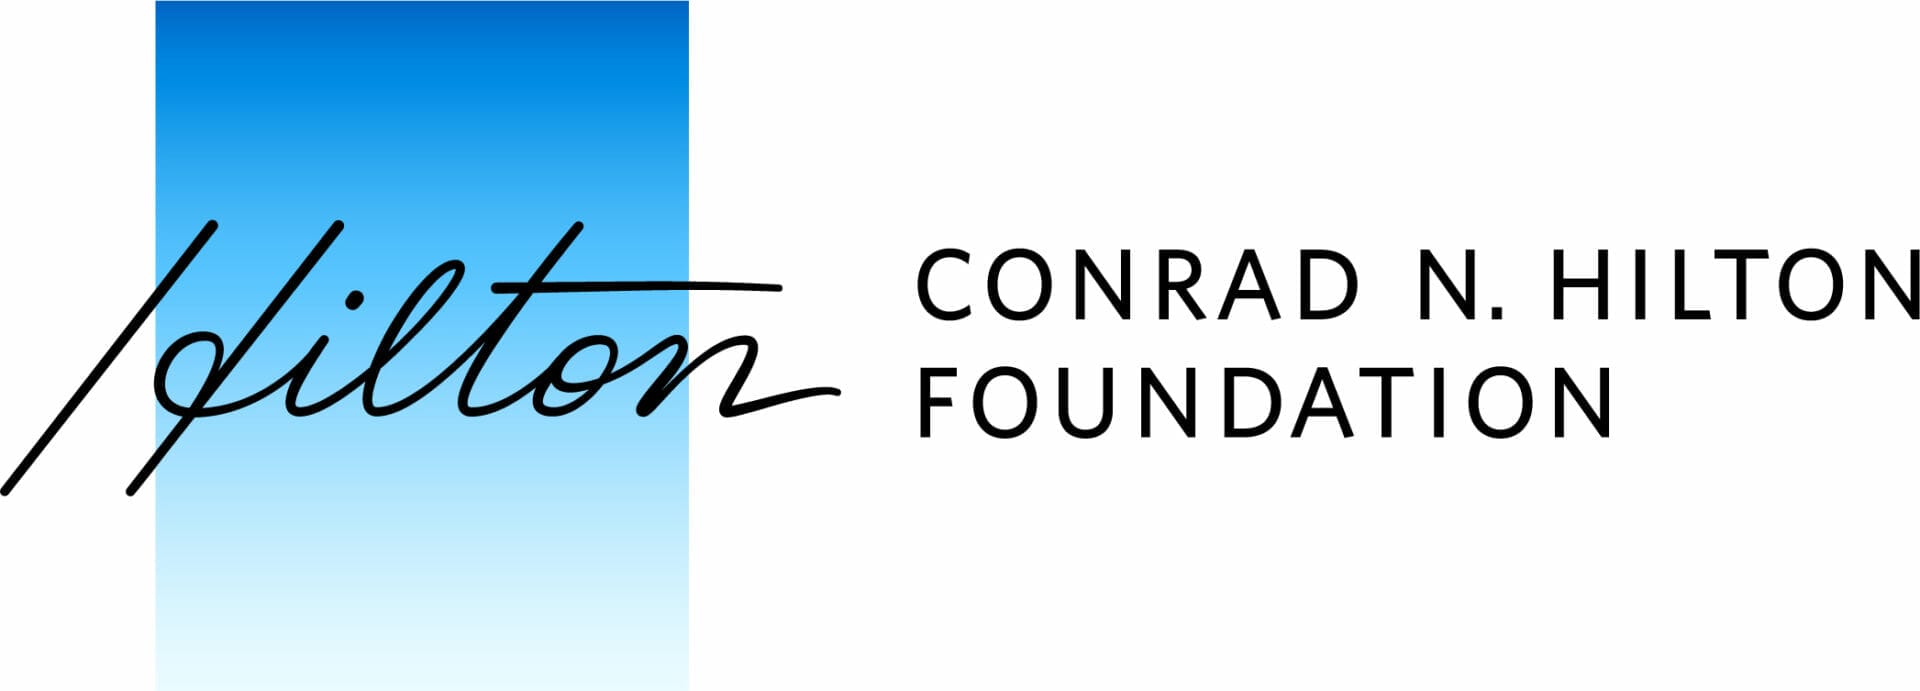 Conrad N. Hilton Foundation logo horizontal